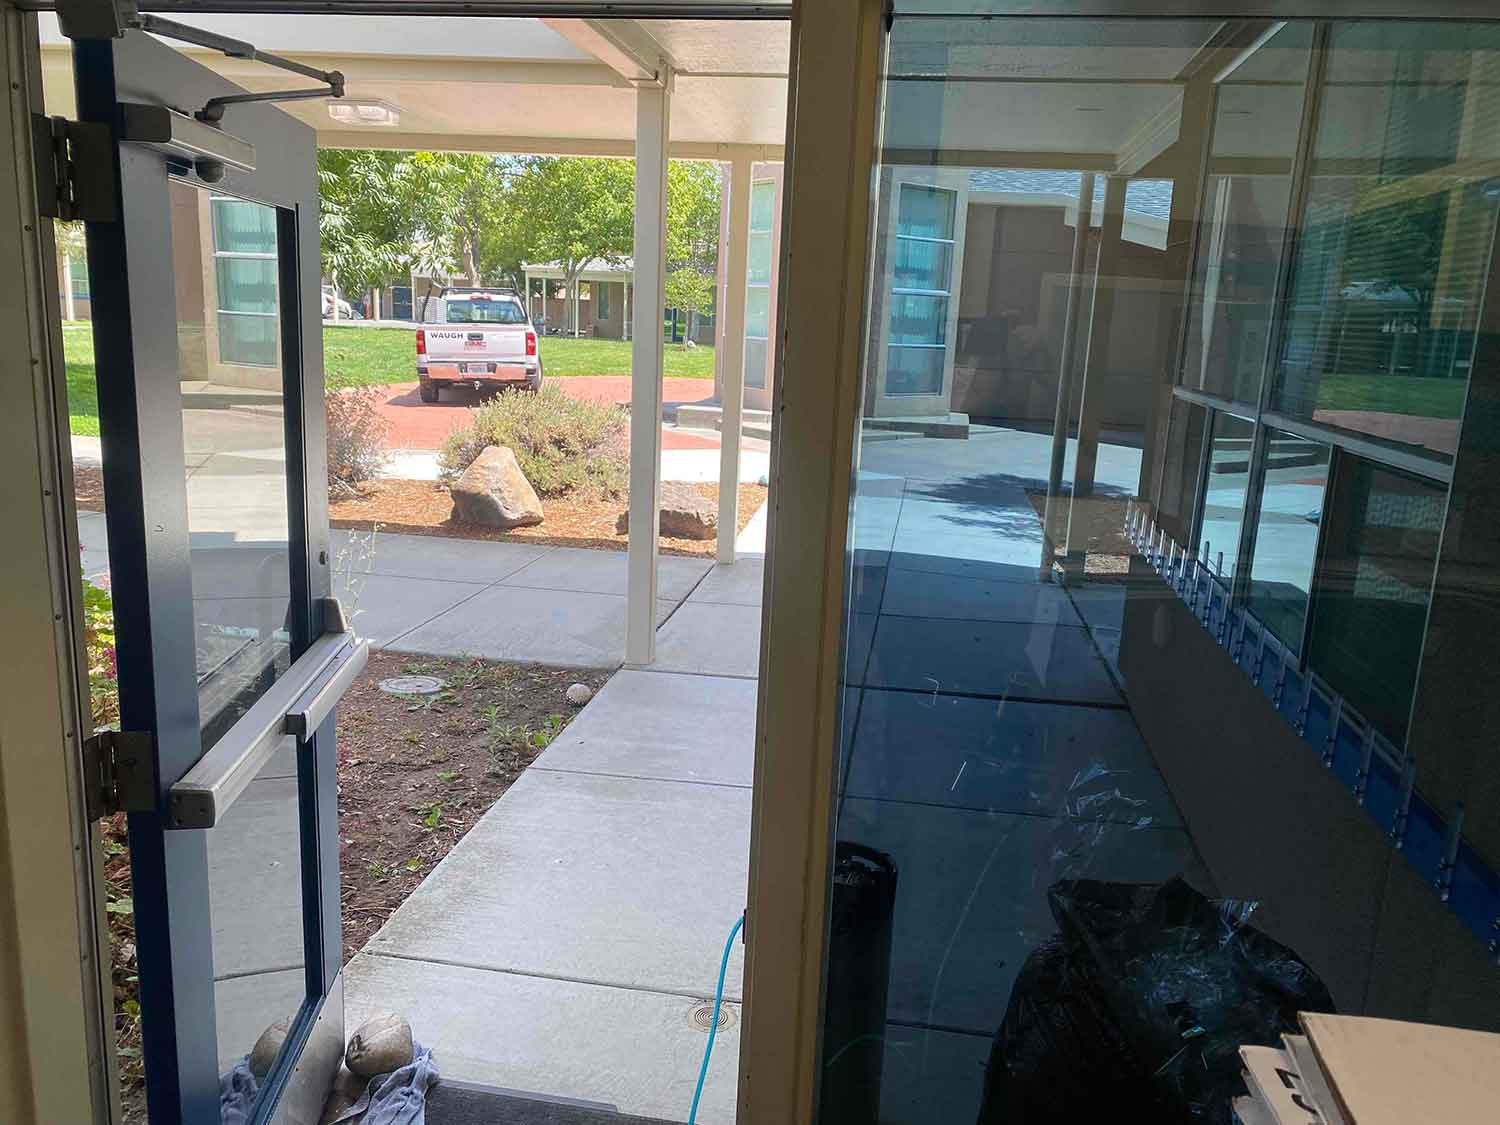 ClimatePro created a better Petaluma classroom with 3M Affinity Window Film.